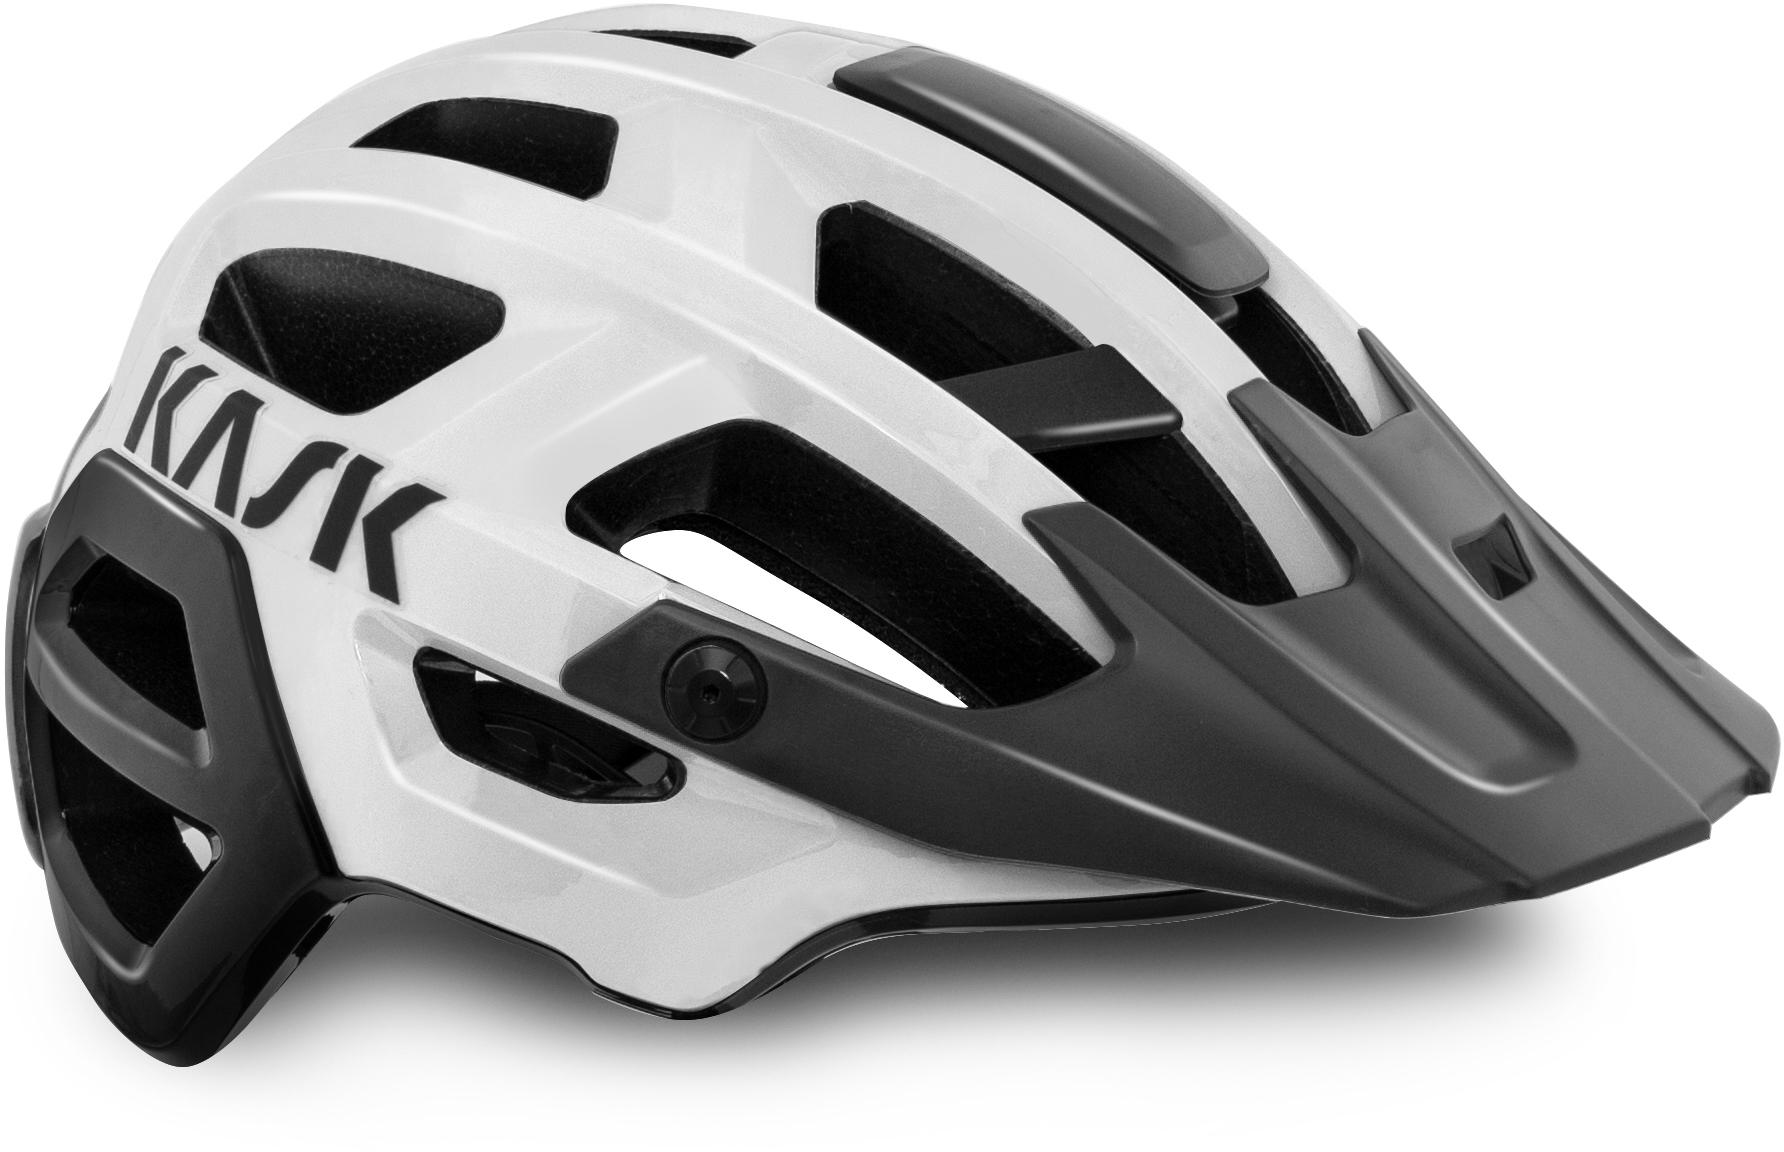 Kask Protone Wg11 Road Helmet, White, Large